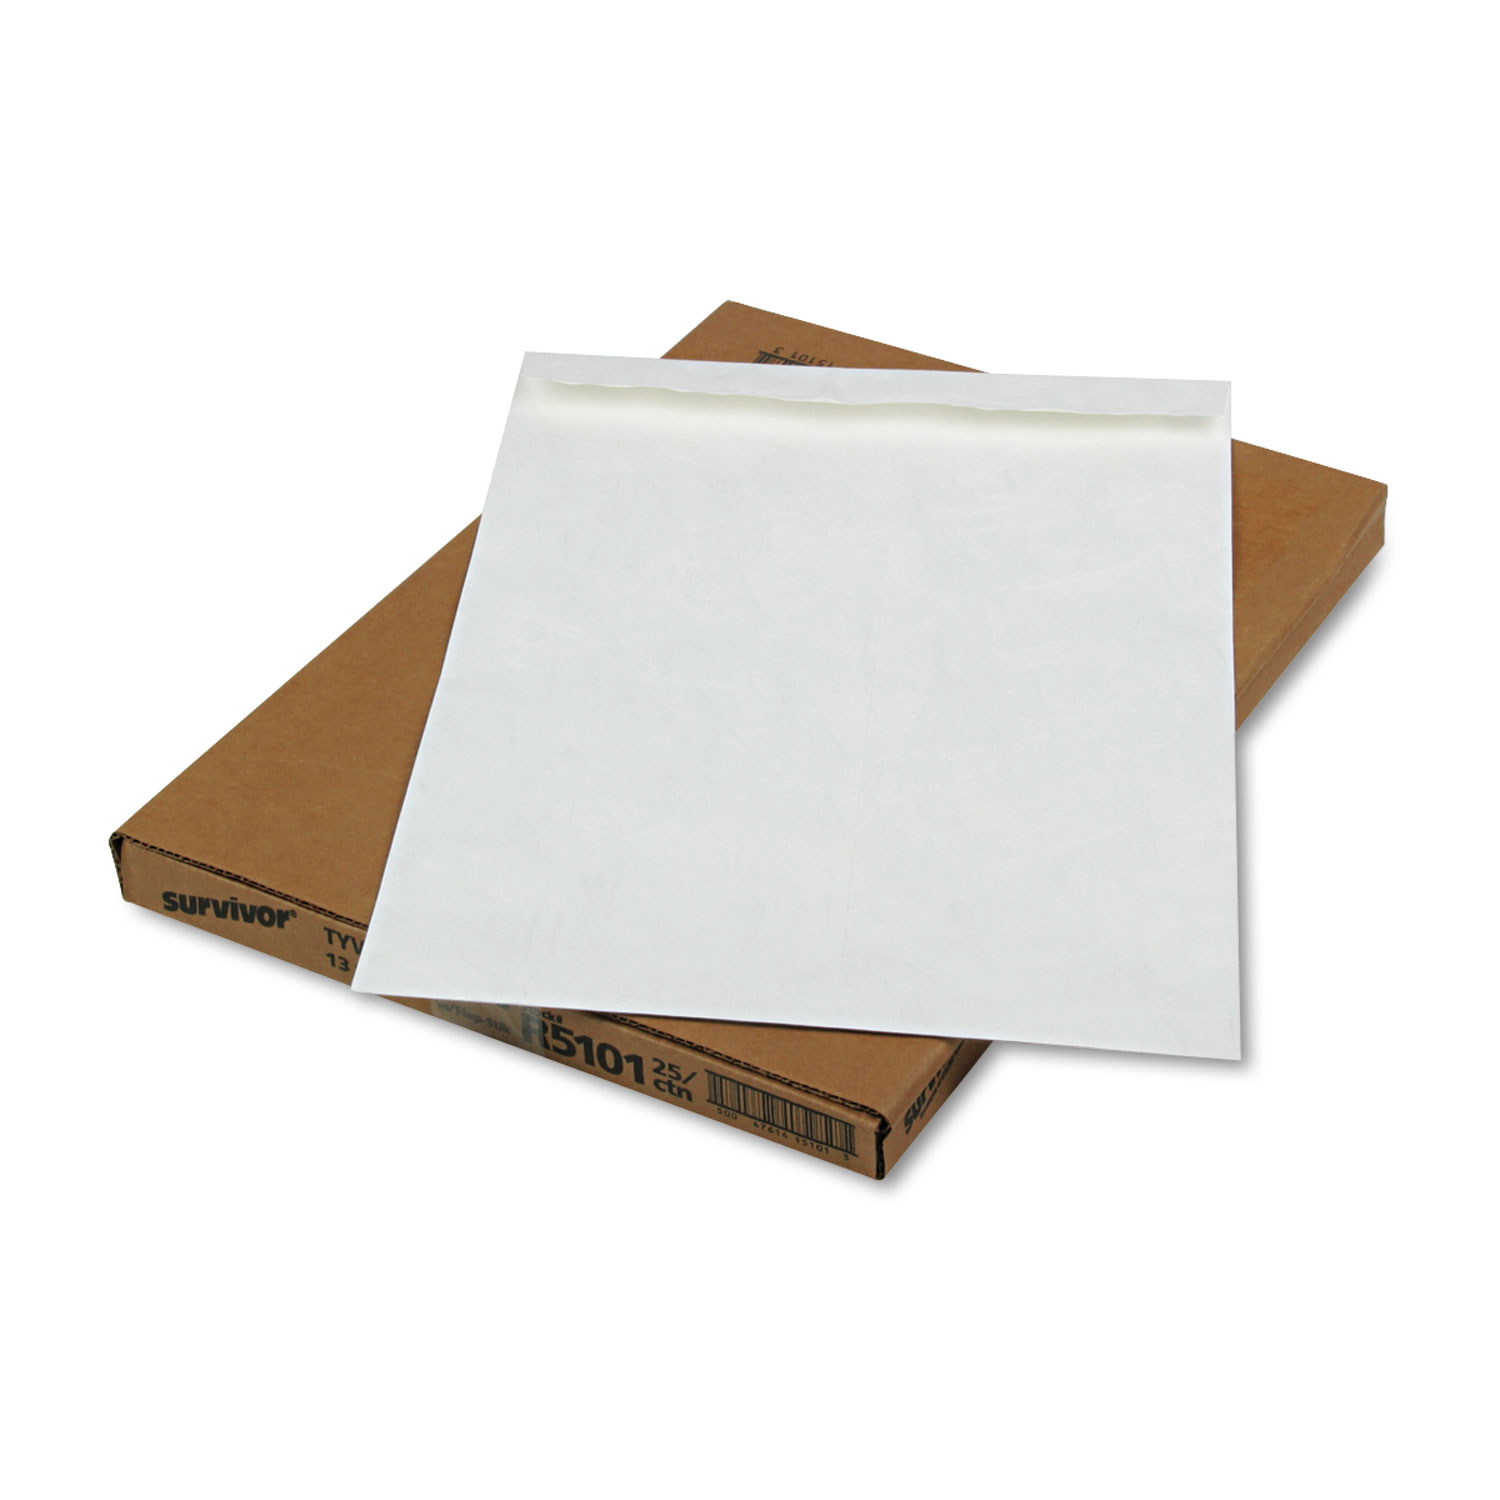  Survivor QUAR5101 Catalog Mailers Made of DuPont Tyvek, Self-Adhesive Closure, 13 x 19, White, 25/Box (QUAR5101) 